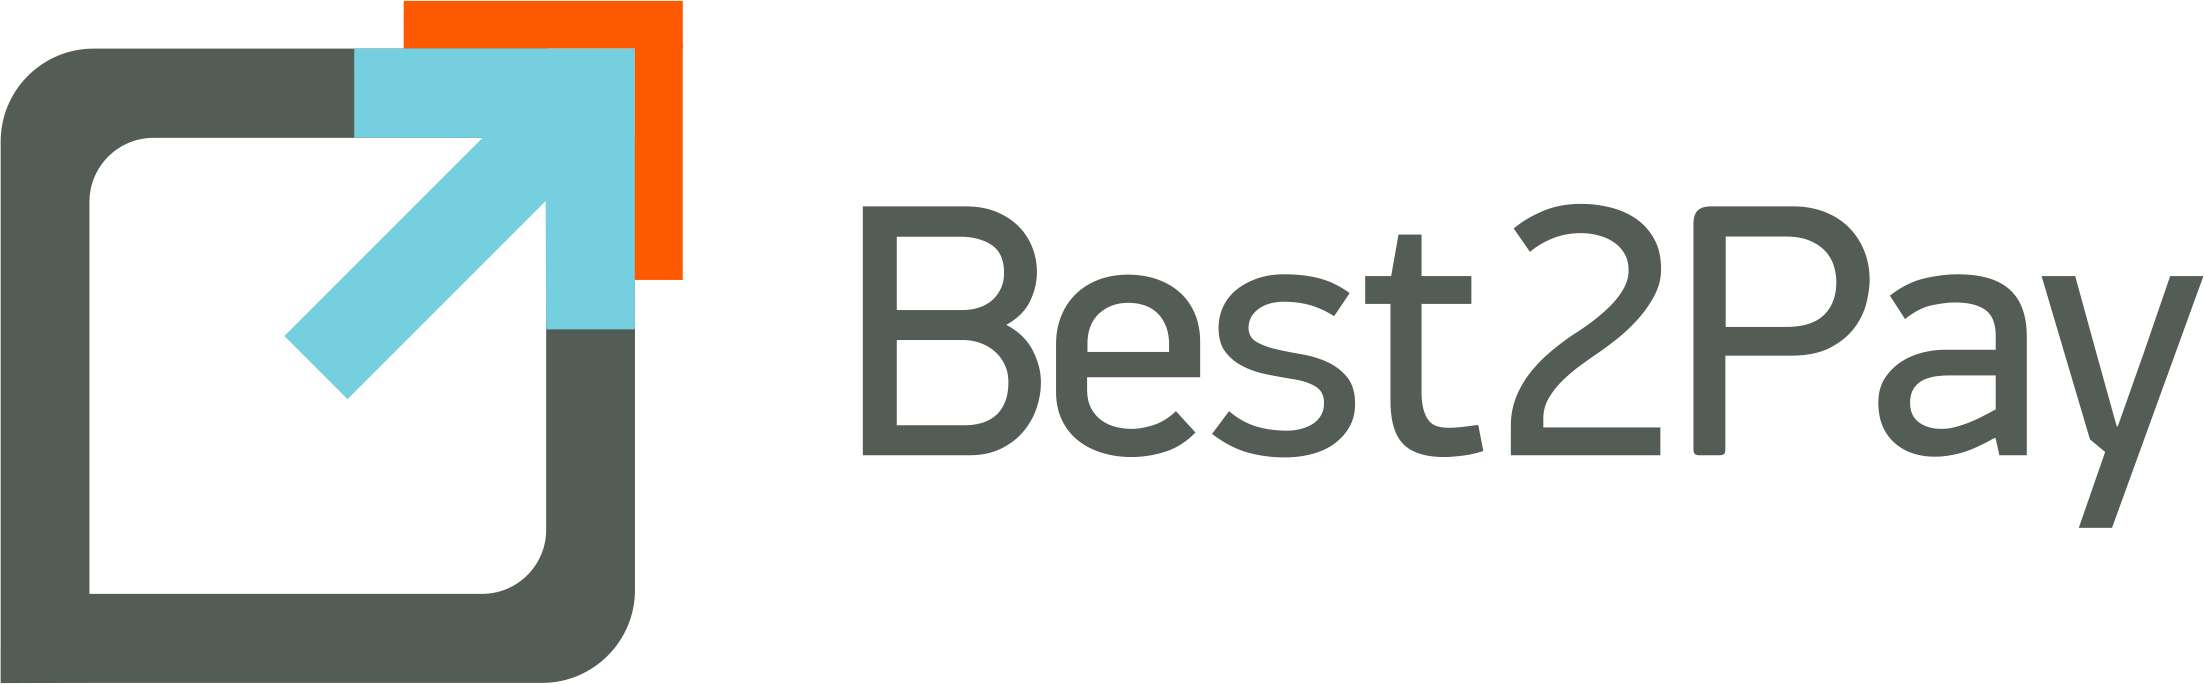 Second pay. Best2pay. Best2pay logo. Best2pay терминал. Best2pay логотипы svg.